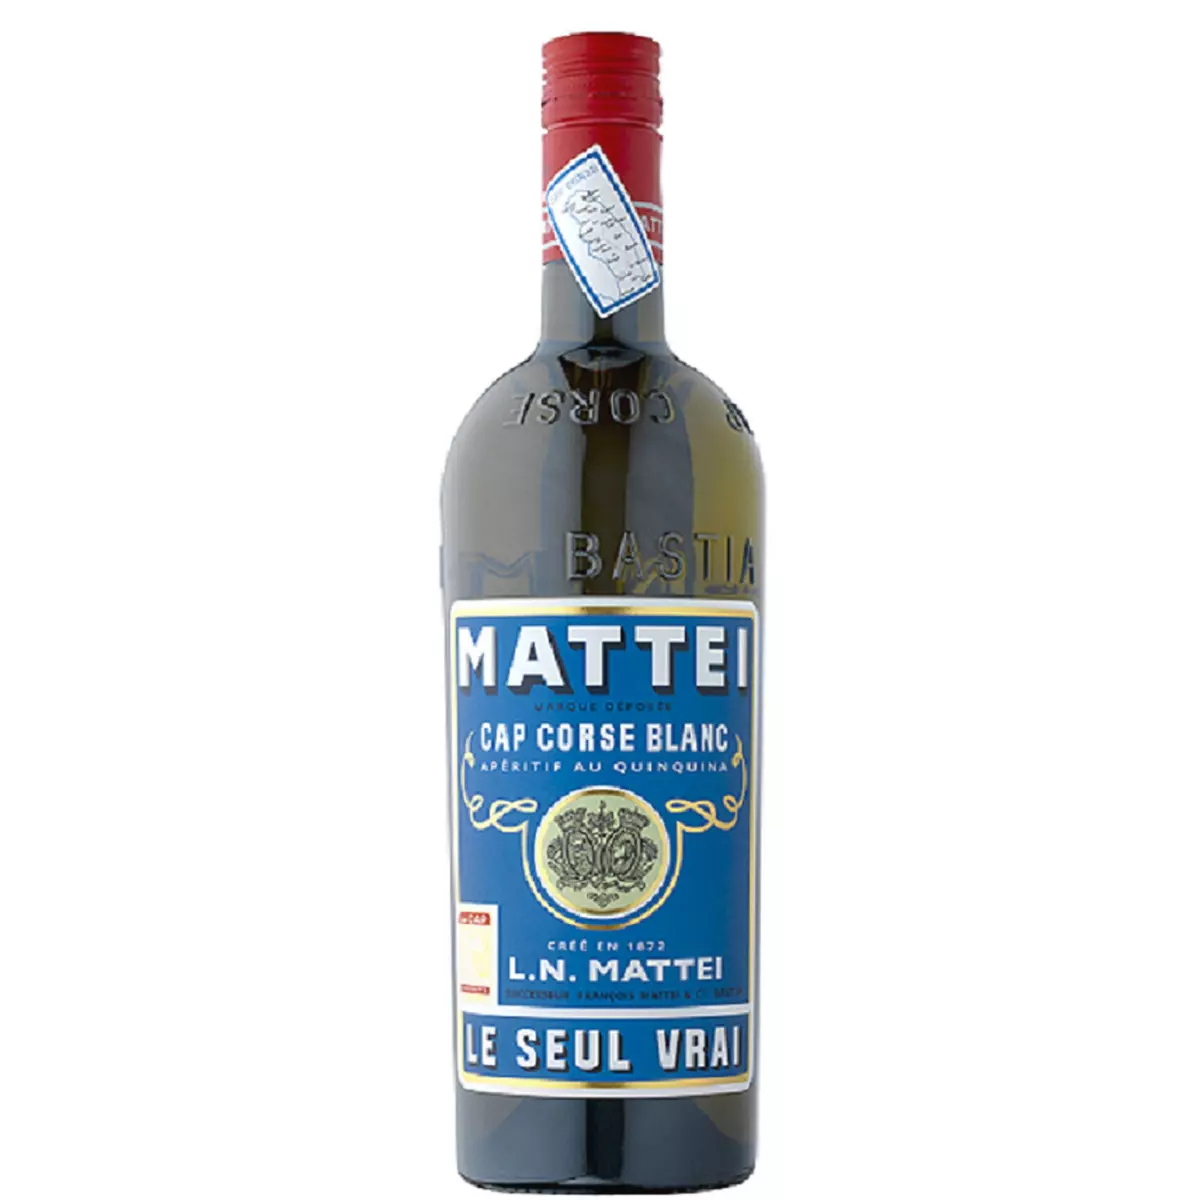 MATTEI Apéritif au quinquina Cap Corse blanc 15% 75cl